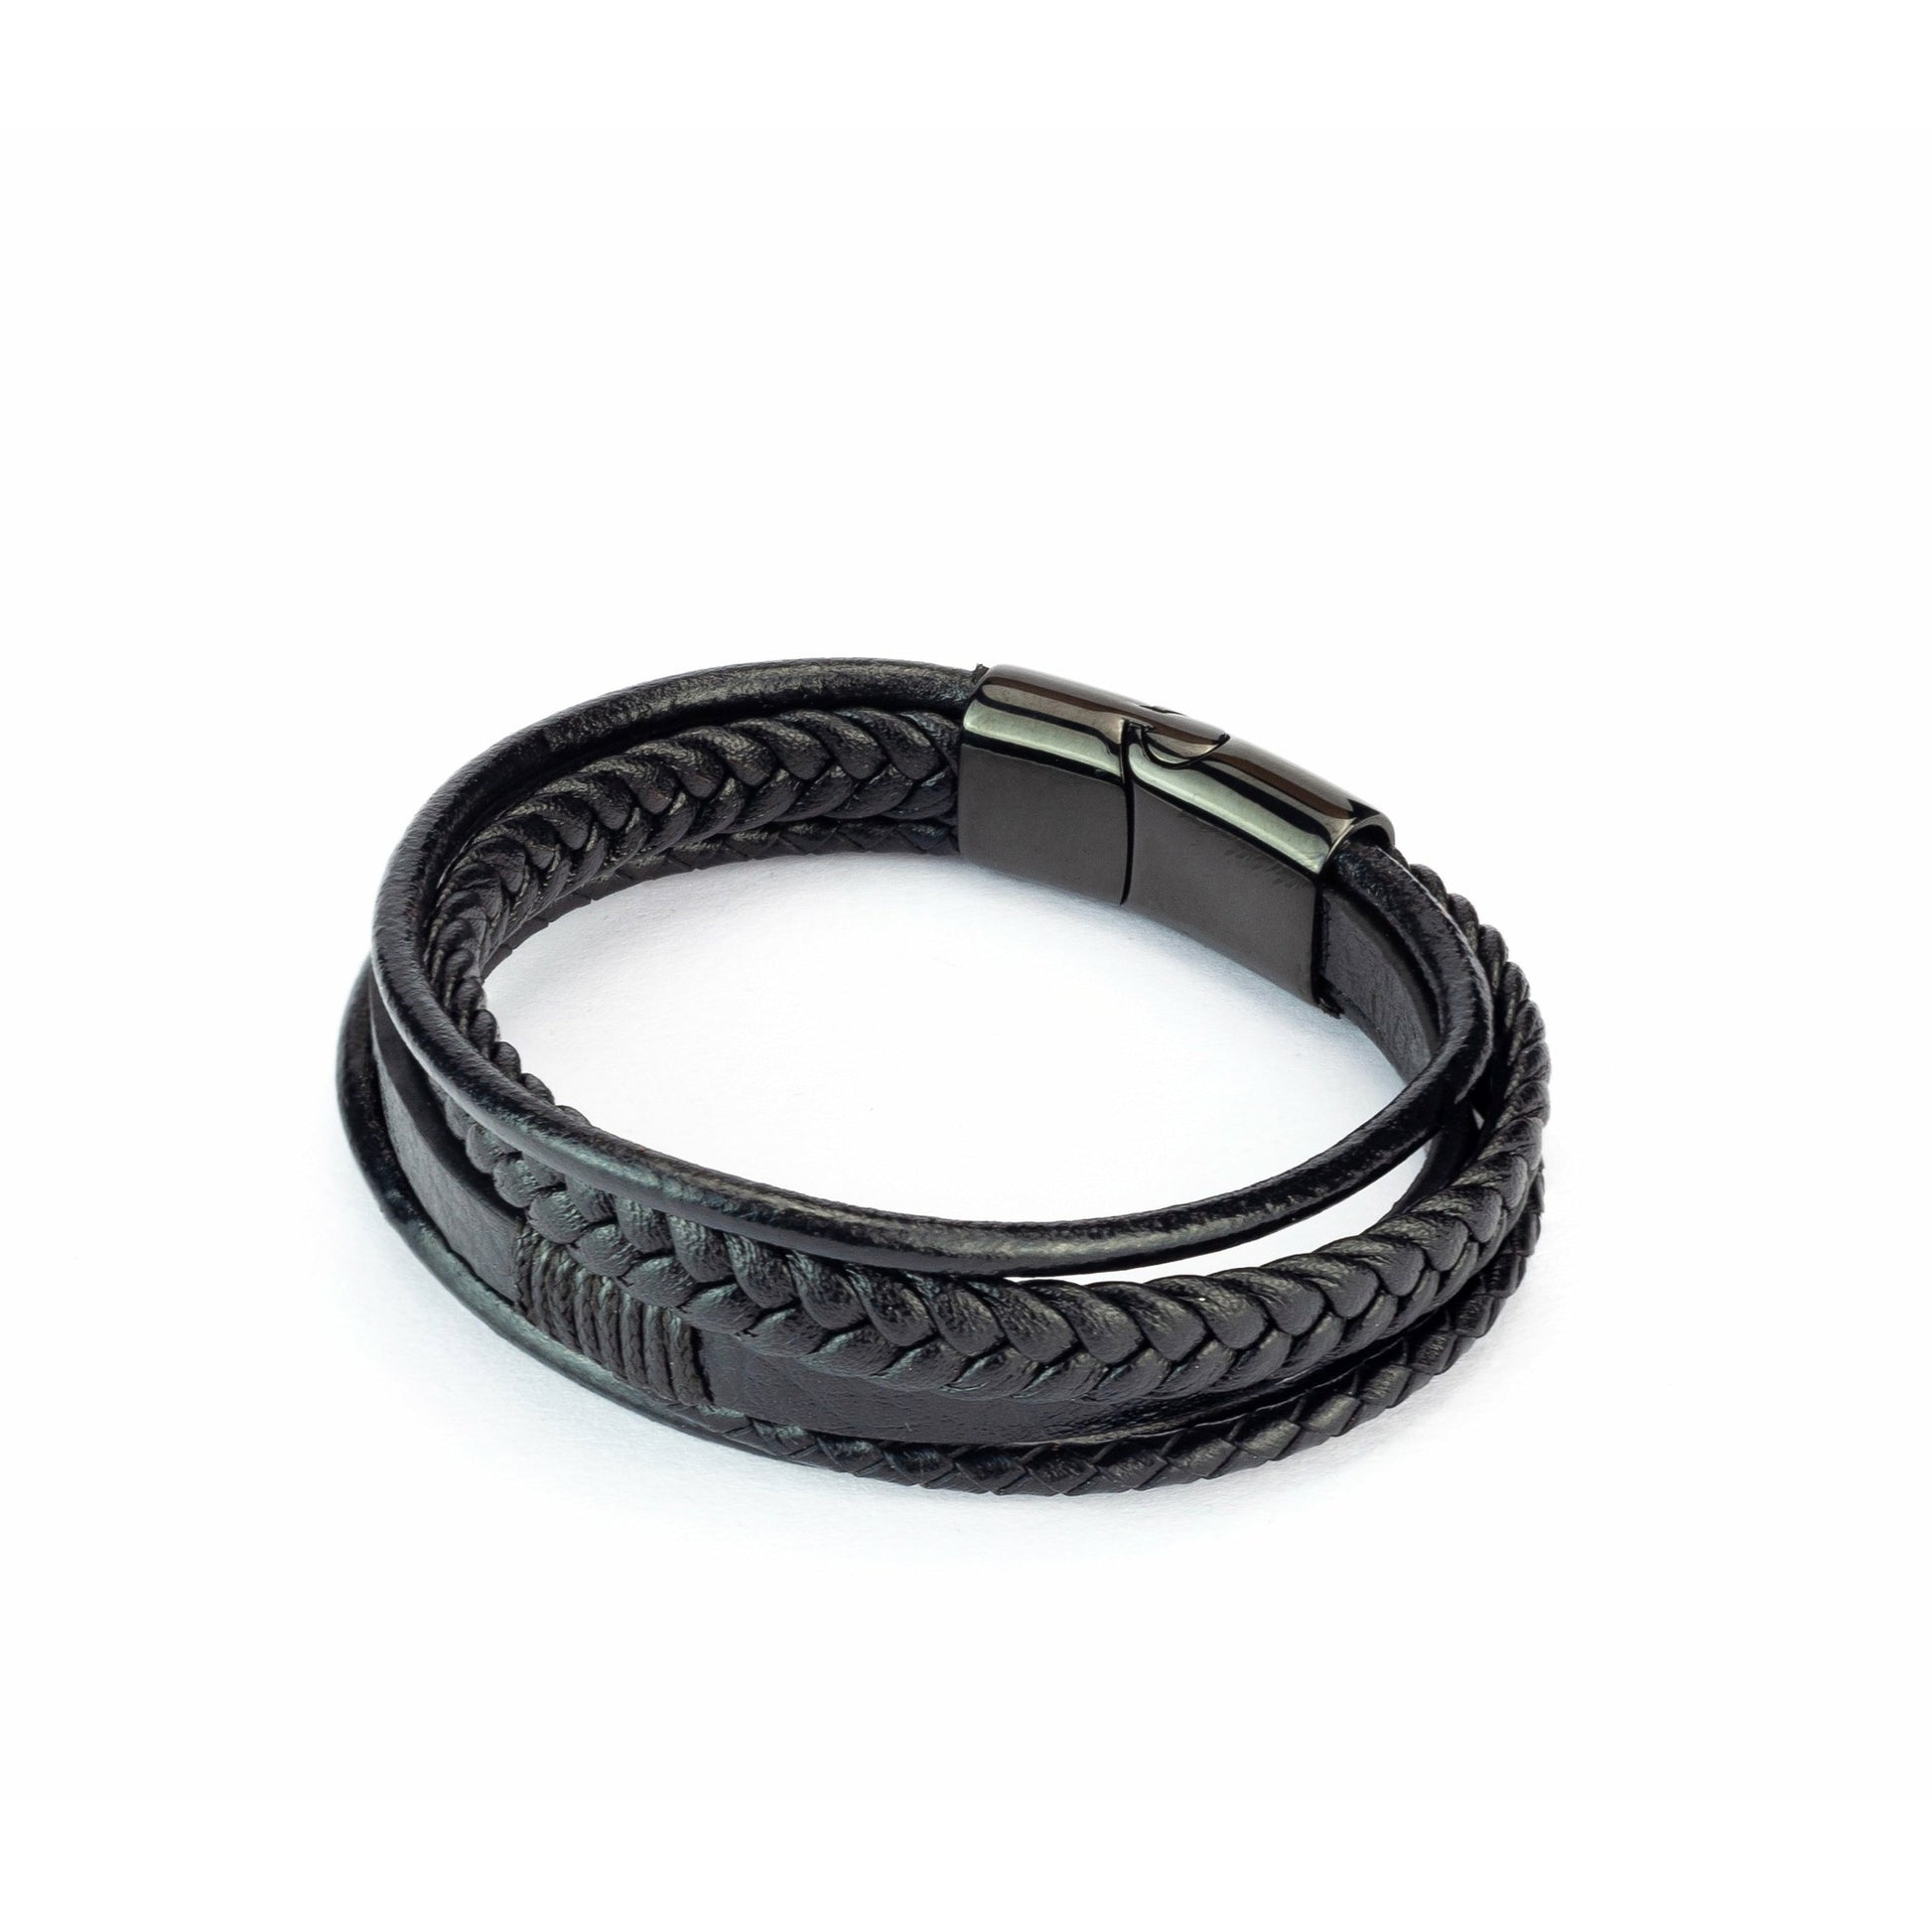 Classic Leather Strap Bracelet in black